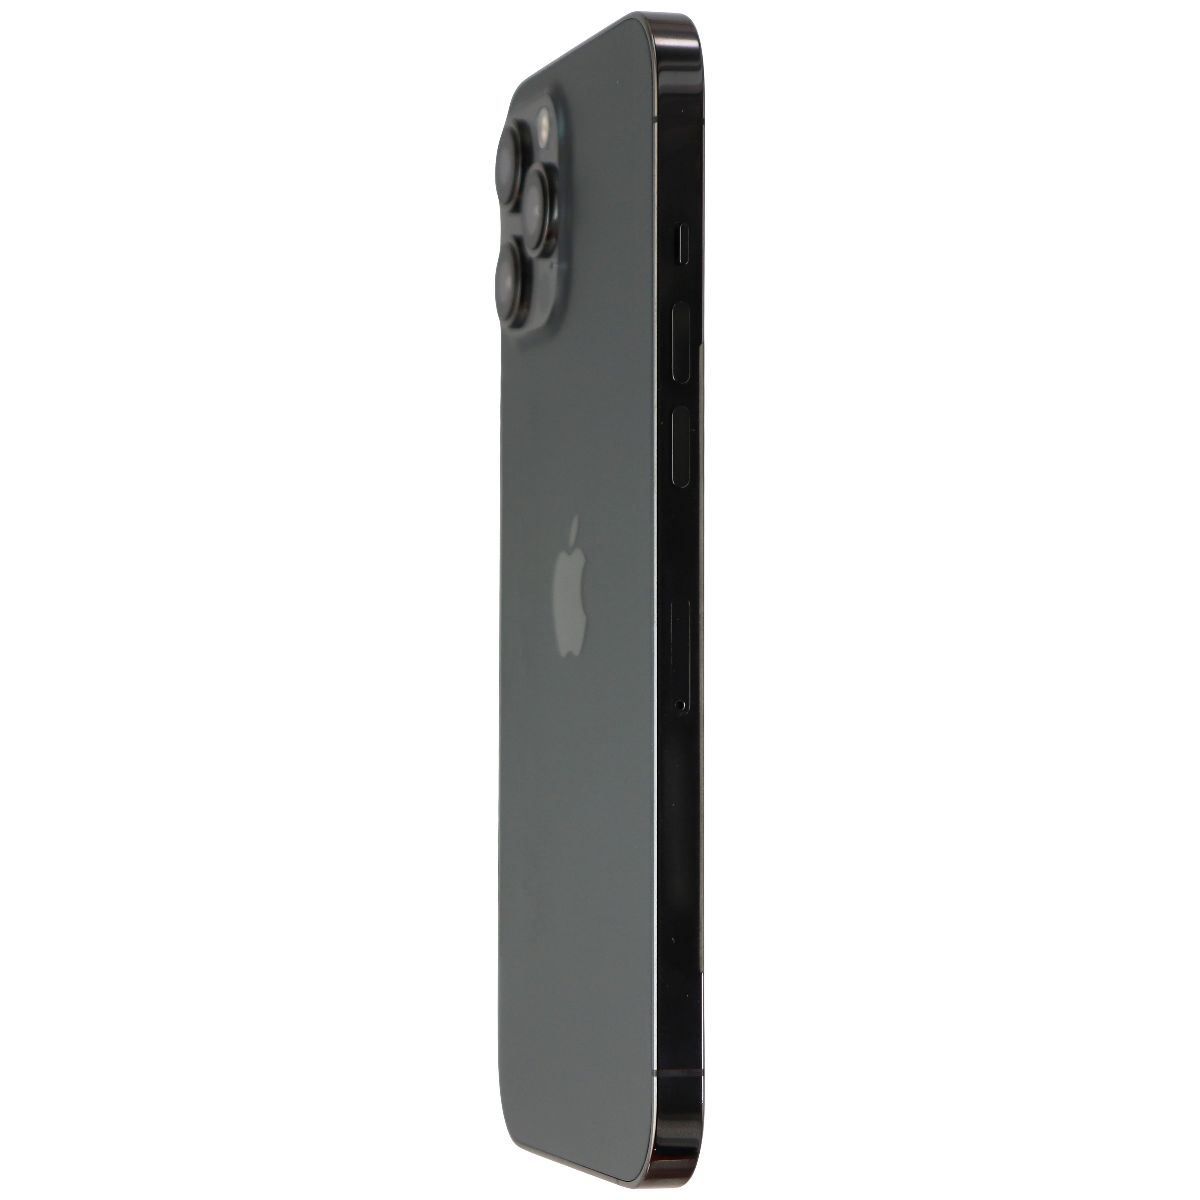 Apple iPhone 12 Pro (6.1-inch) Smartphone (A2341) Verizon - 128GB / Graphite Cell Phones & Smartphones Apple    - Simple Cell Bulk Wholesale Pricing - USA Seller